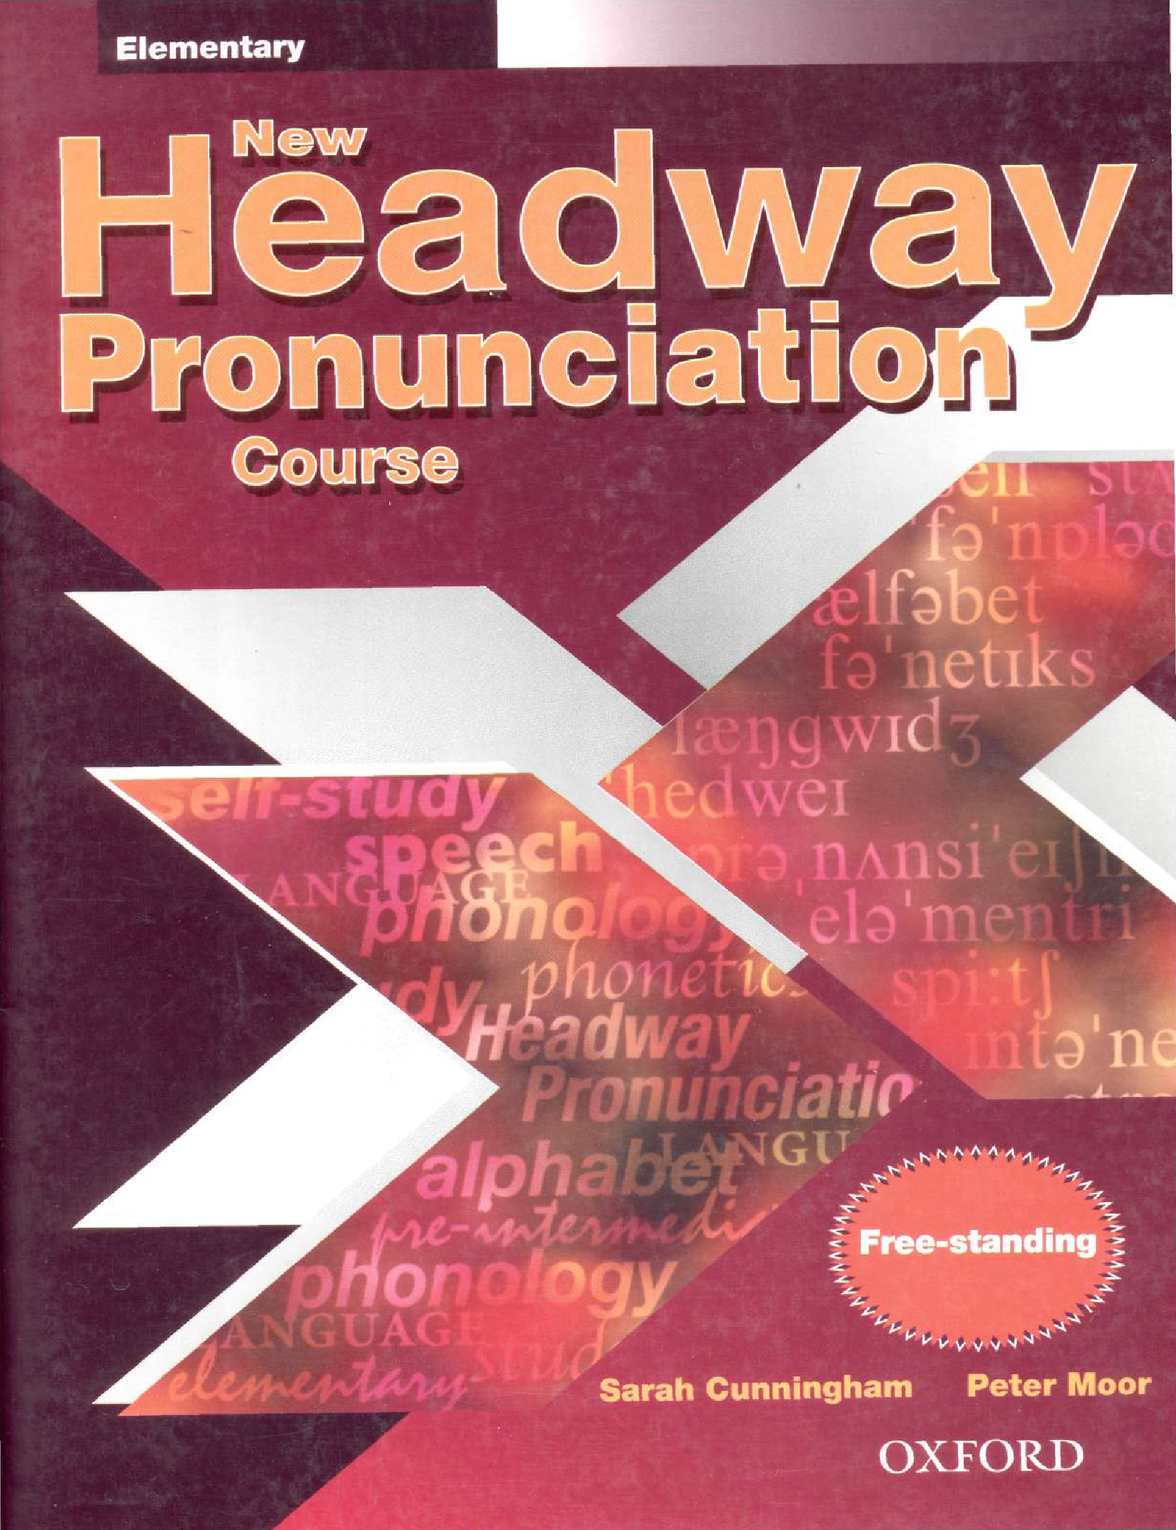 Elementary pronunciation. New Headway pronunciation course. Headway pronunciation course. Oxford New Headway pronunciation course. Учебник по английскому Headway.